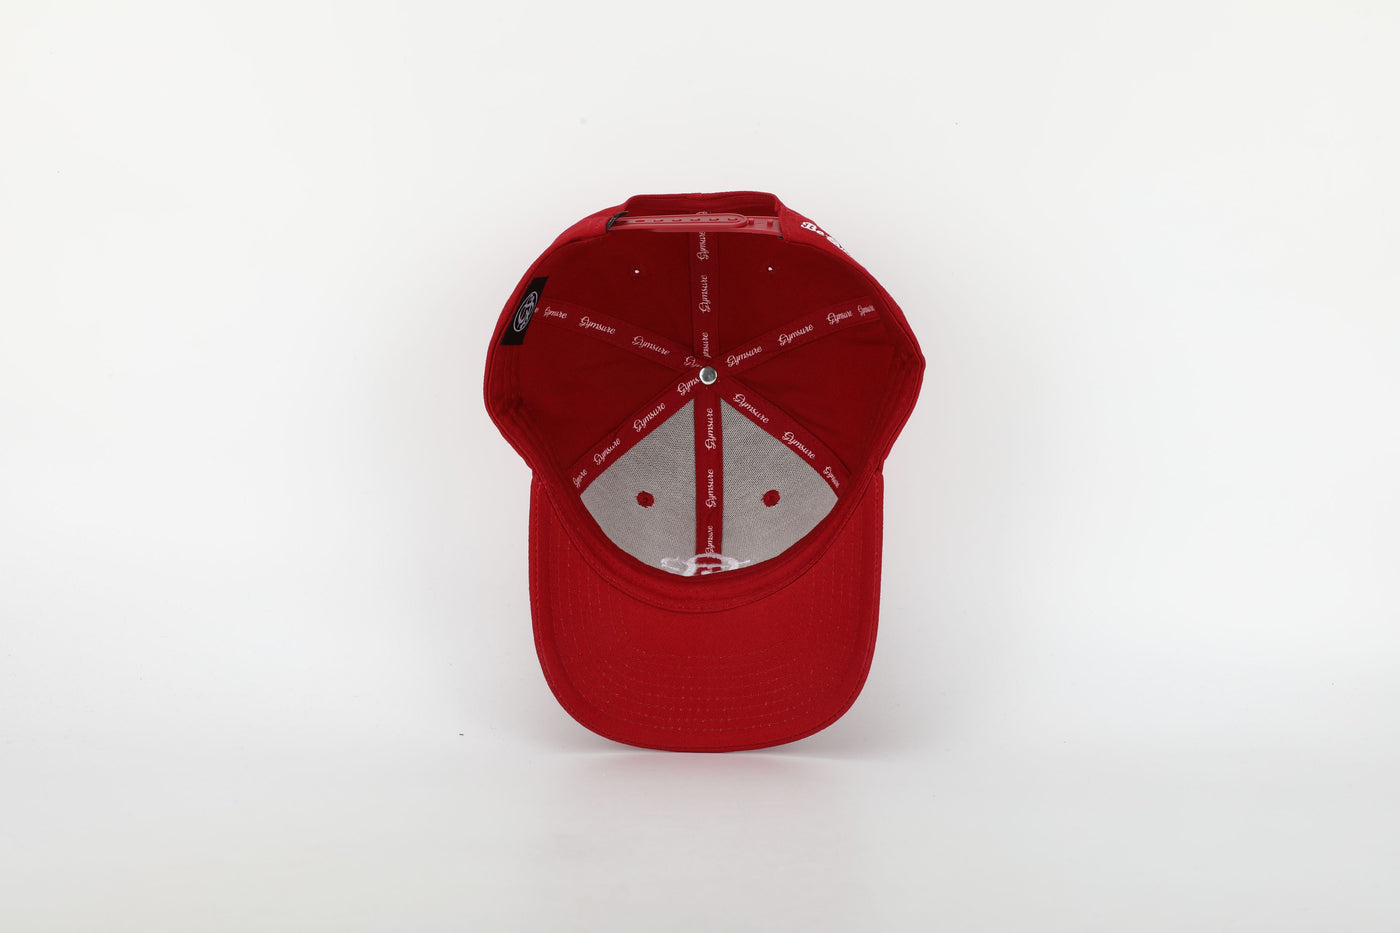 Unisex 6 Panel Baseball Cap Red